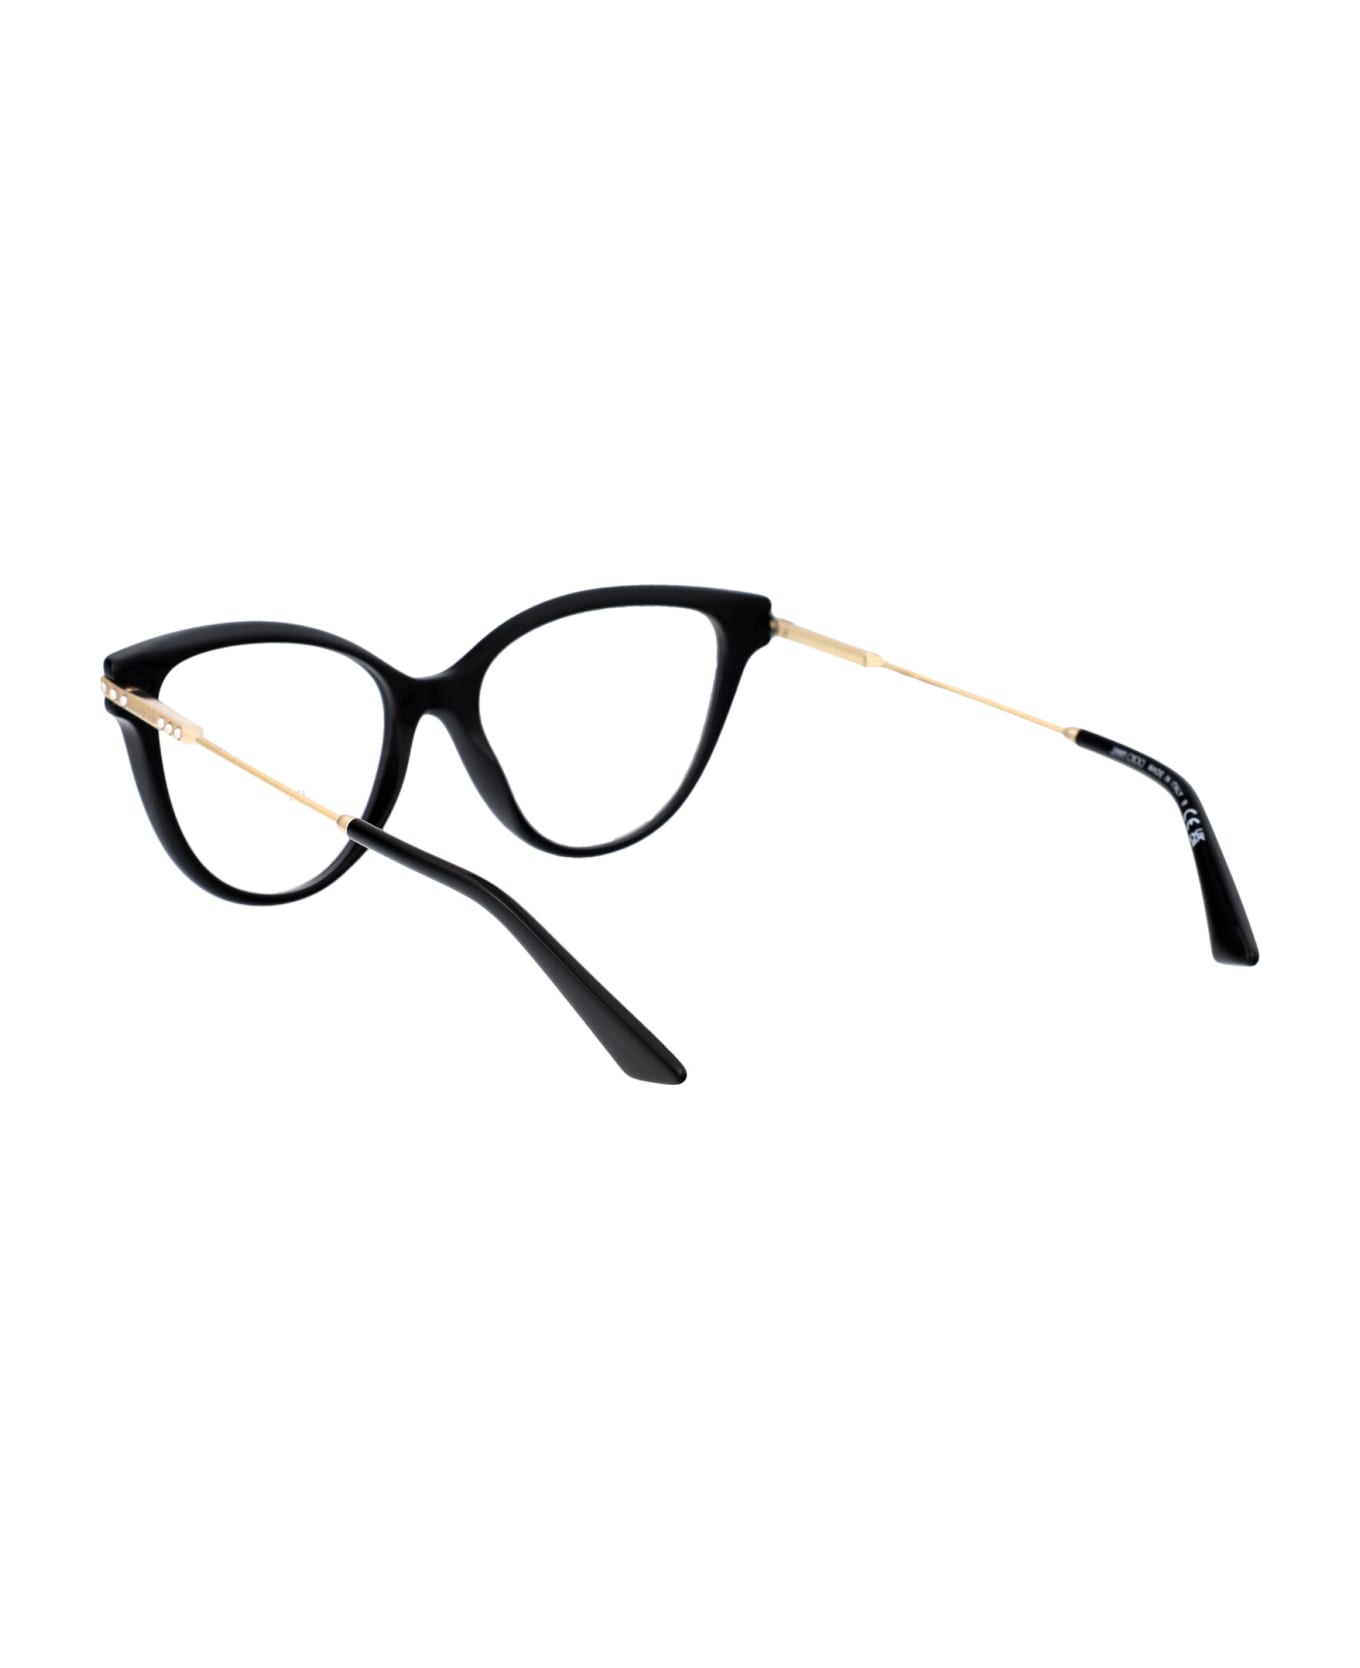 Jimmy Choo Eyewear 0jc4005hb Sunglasses - 300687 Pale Gold